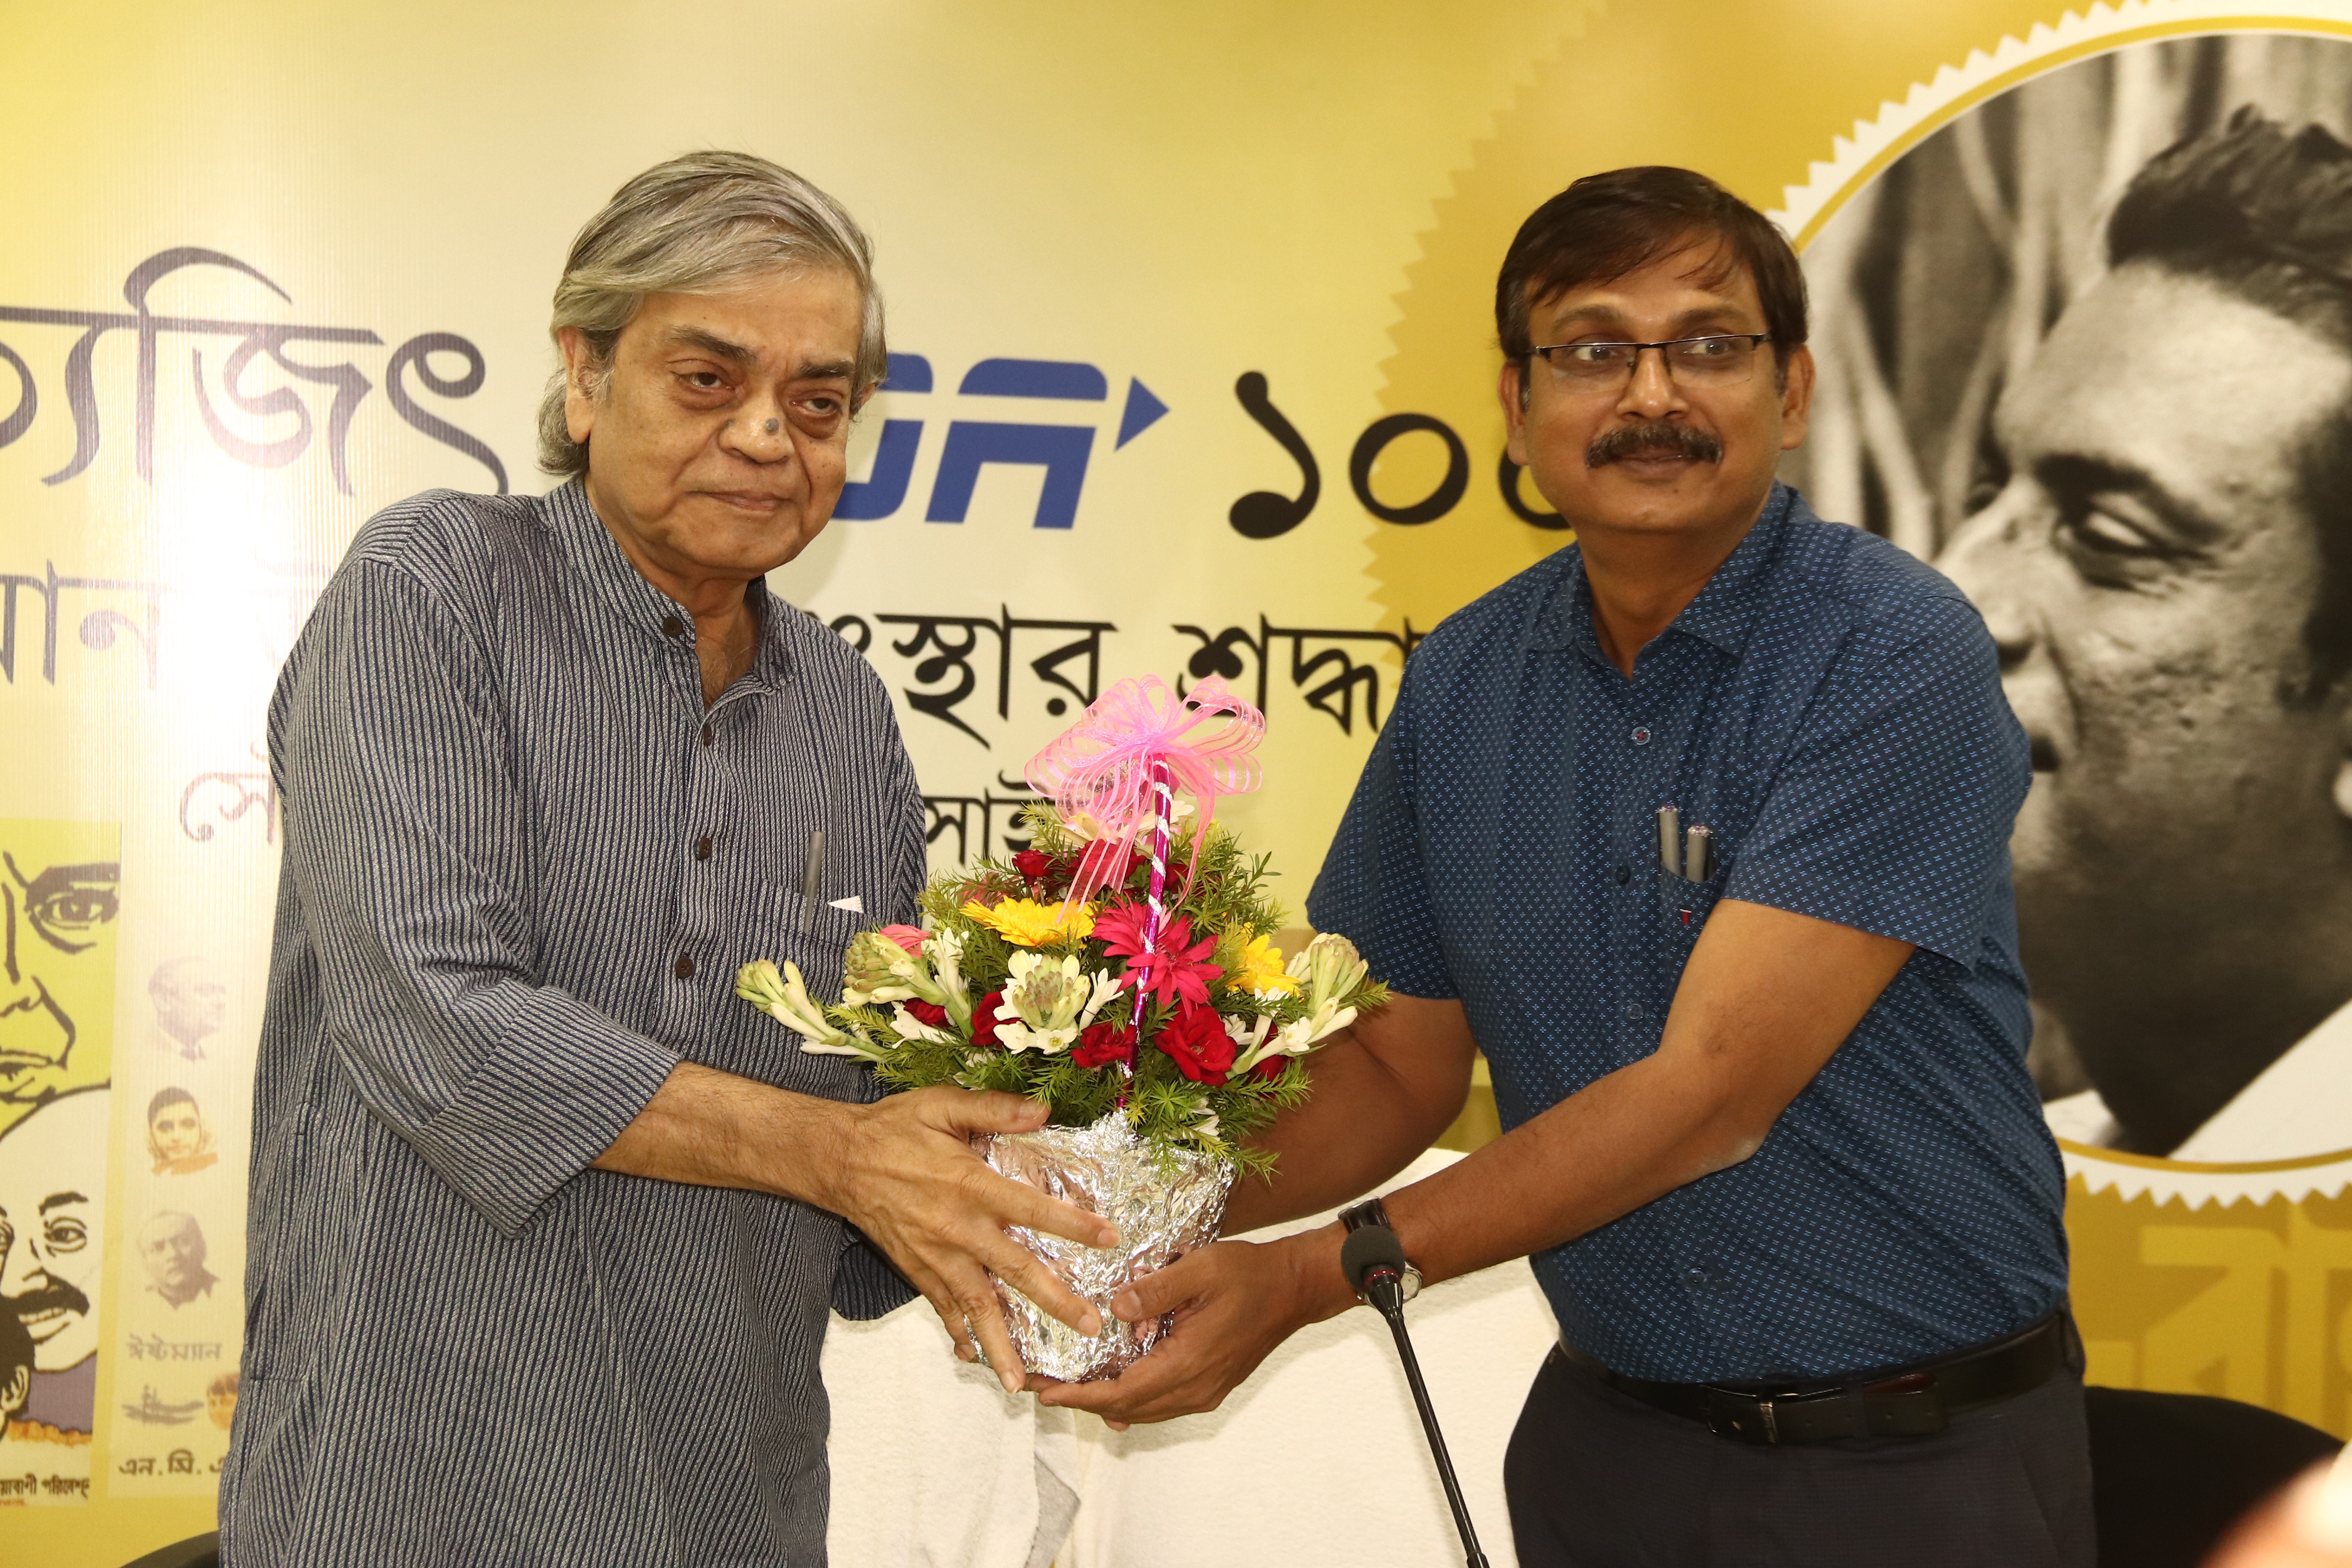 BDA's venture to celebrate the occasion of the birth centenary of Shri Satyajit Ray